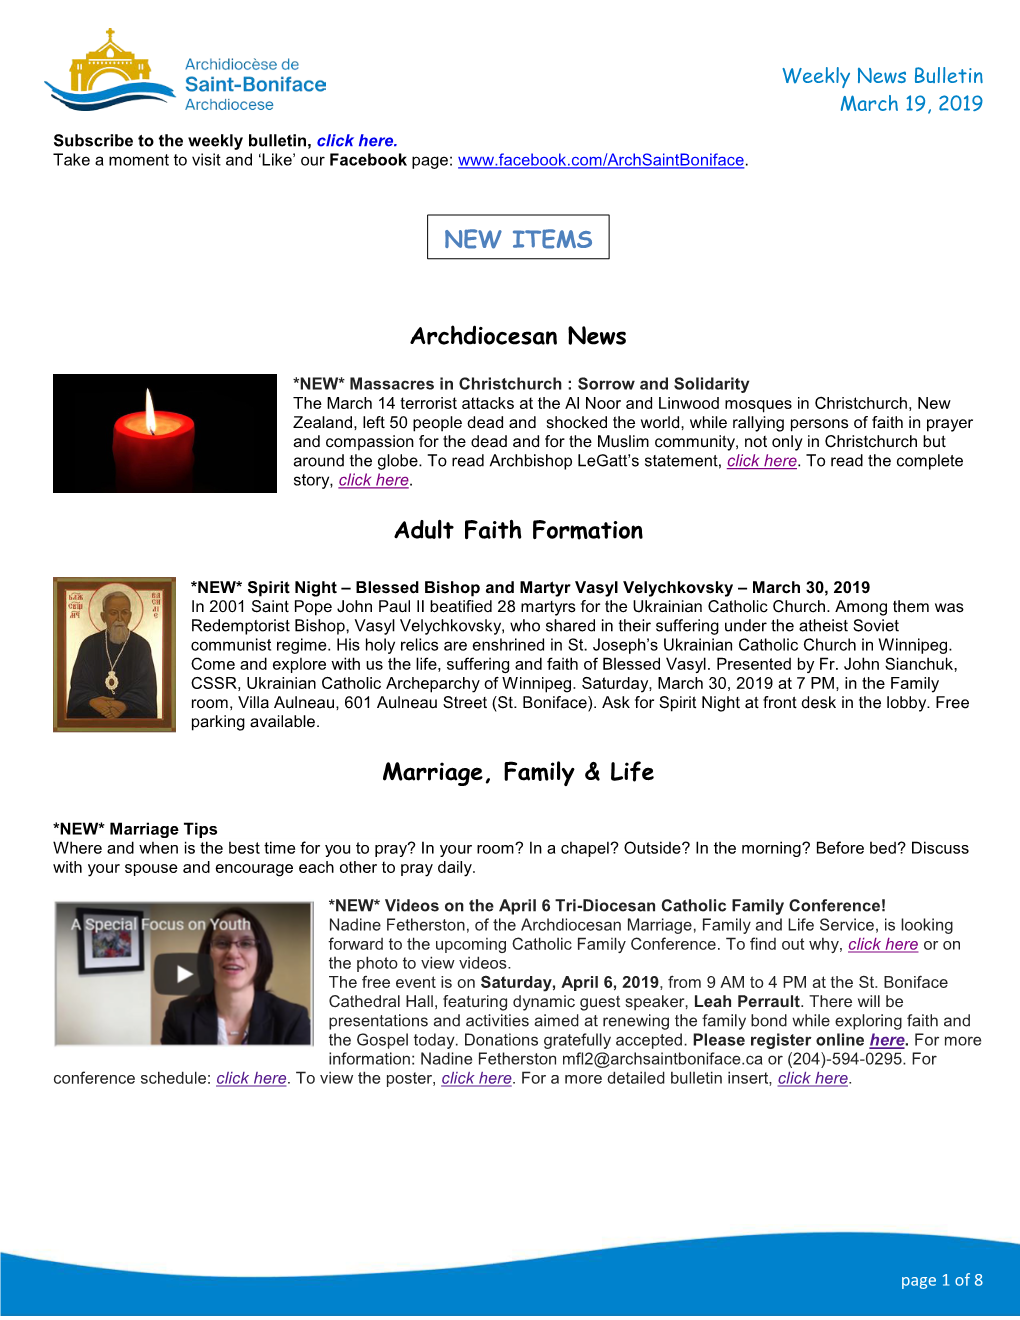 Archdiocesan News Adult Faith Formation Marriage, Family & Life